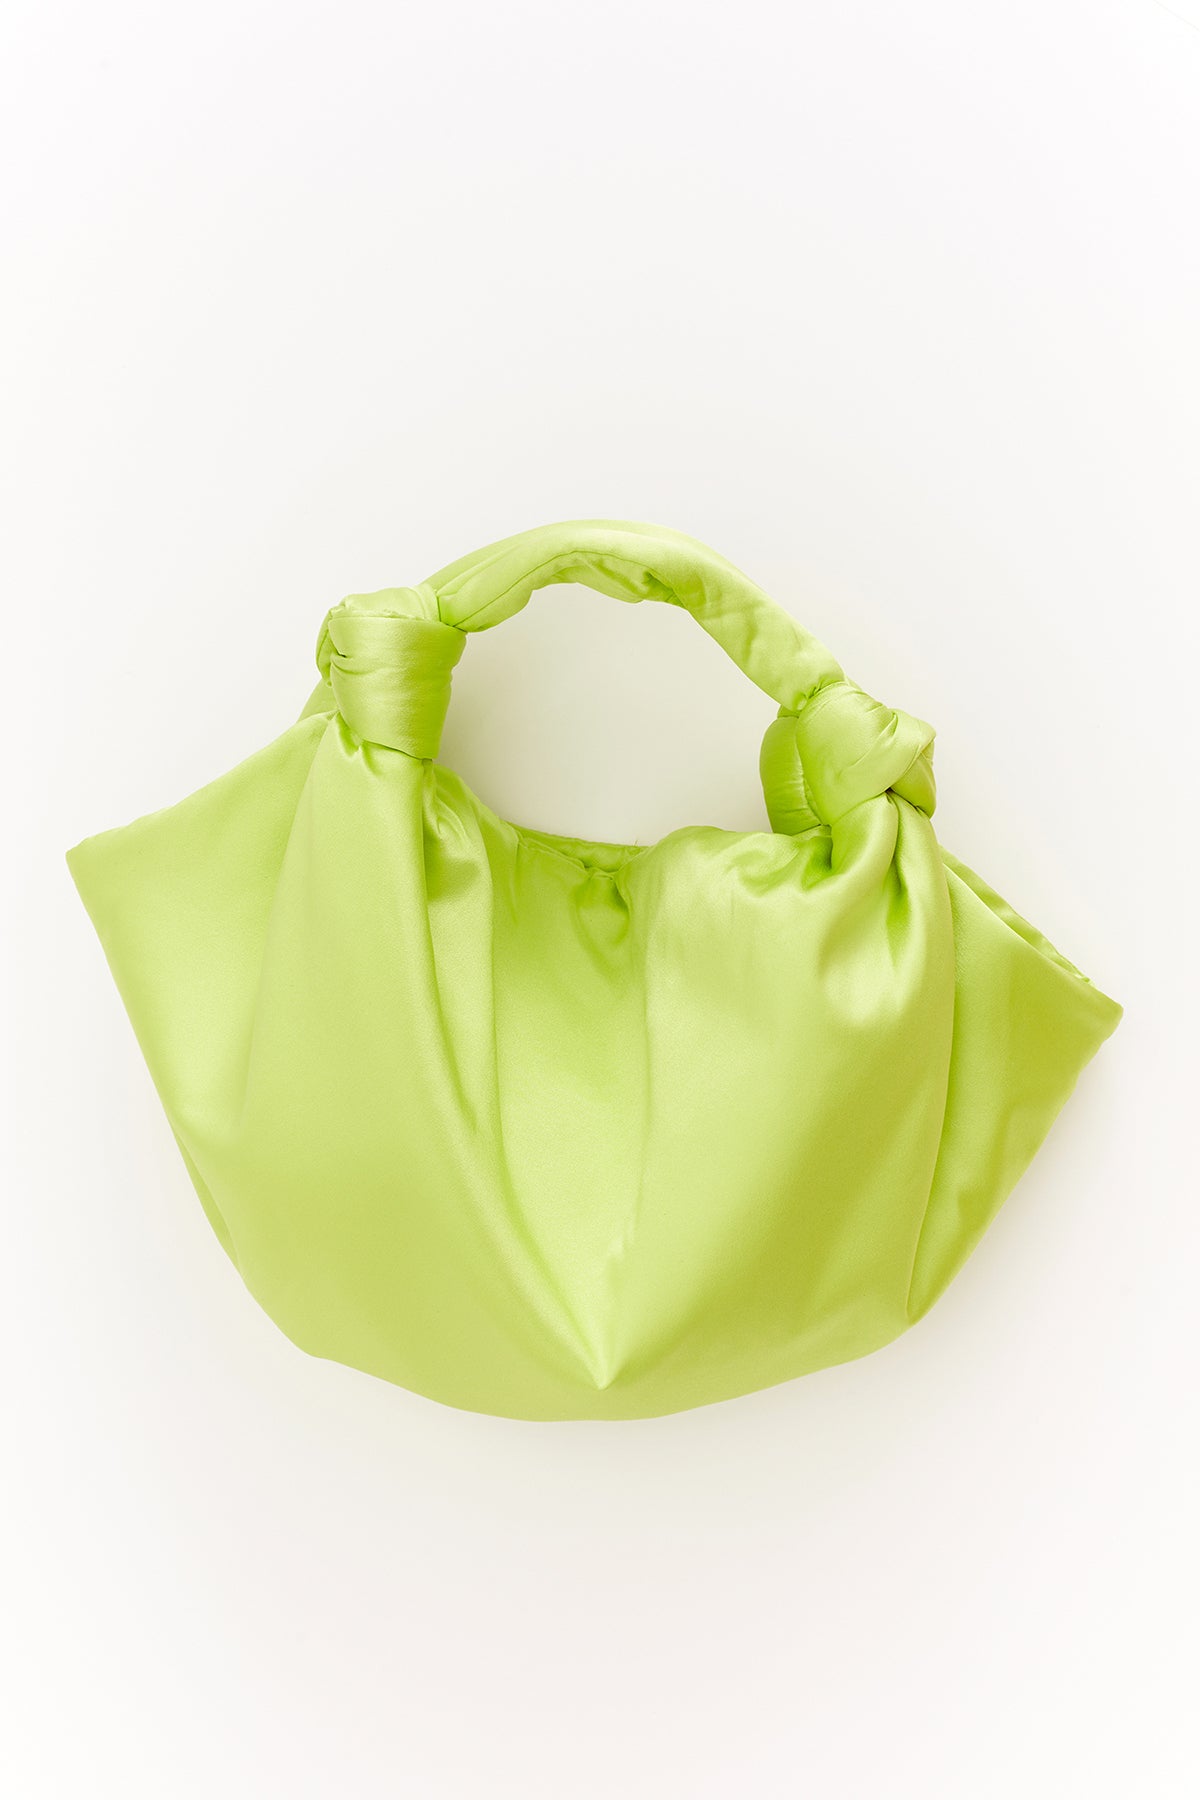   A ROBYN BAG by Velvet by Jenny Graham, a luxury lime green handbag on a satin surface. 